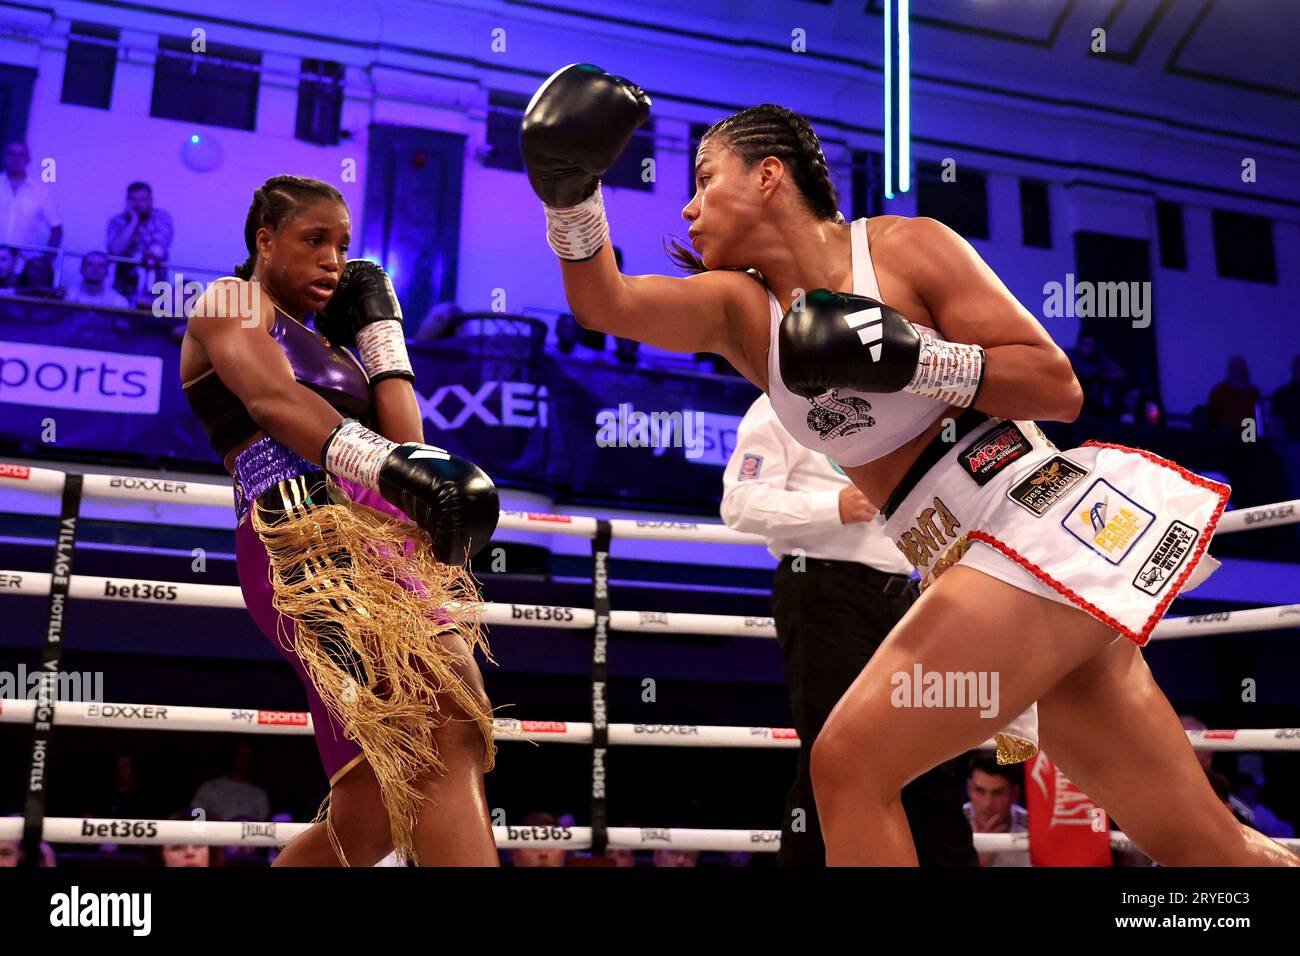 Caroline Dubois (links) und Magali Rodriguez in Aktion während des IBO Lightweight Title Fight in York Hall, London. Bilddatum: Samstag, 30. September 2023. Stockfoto